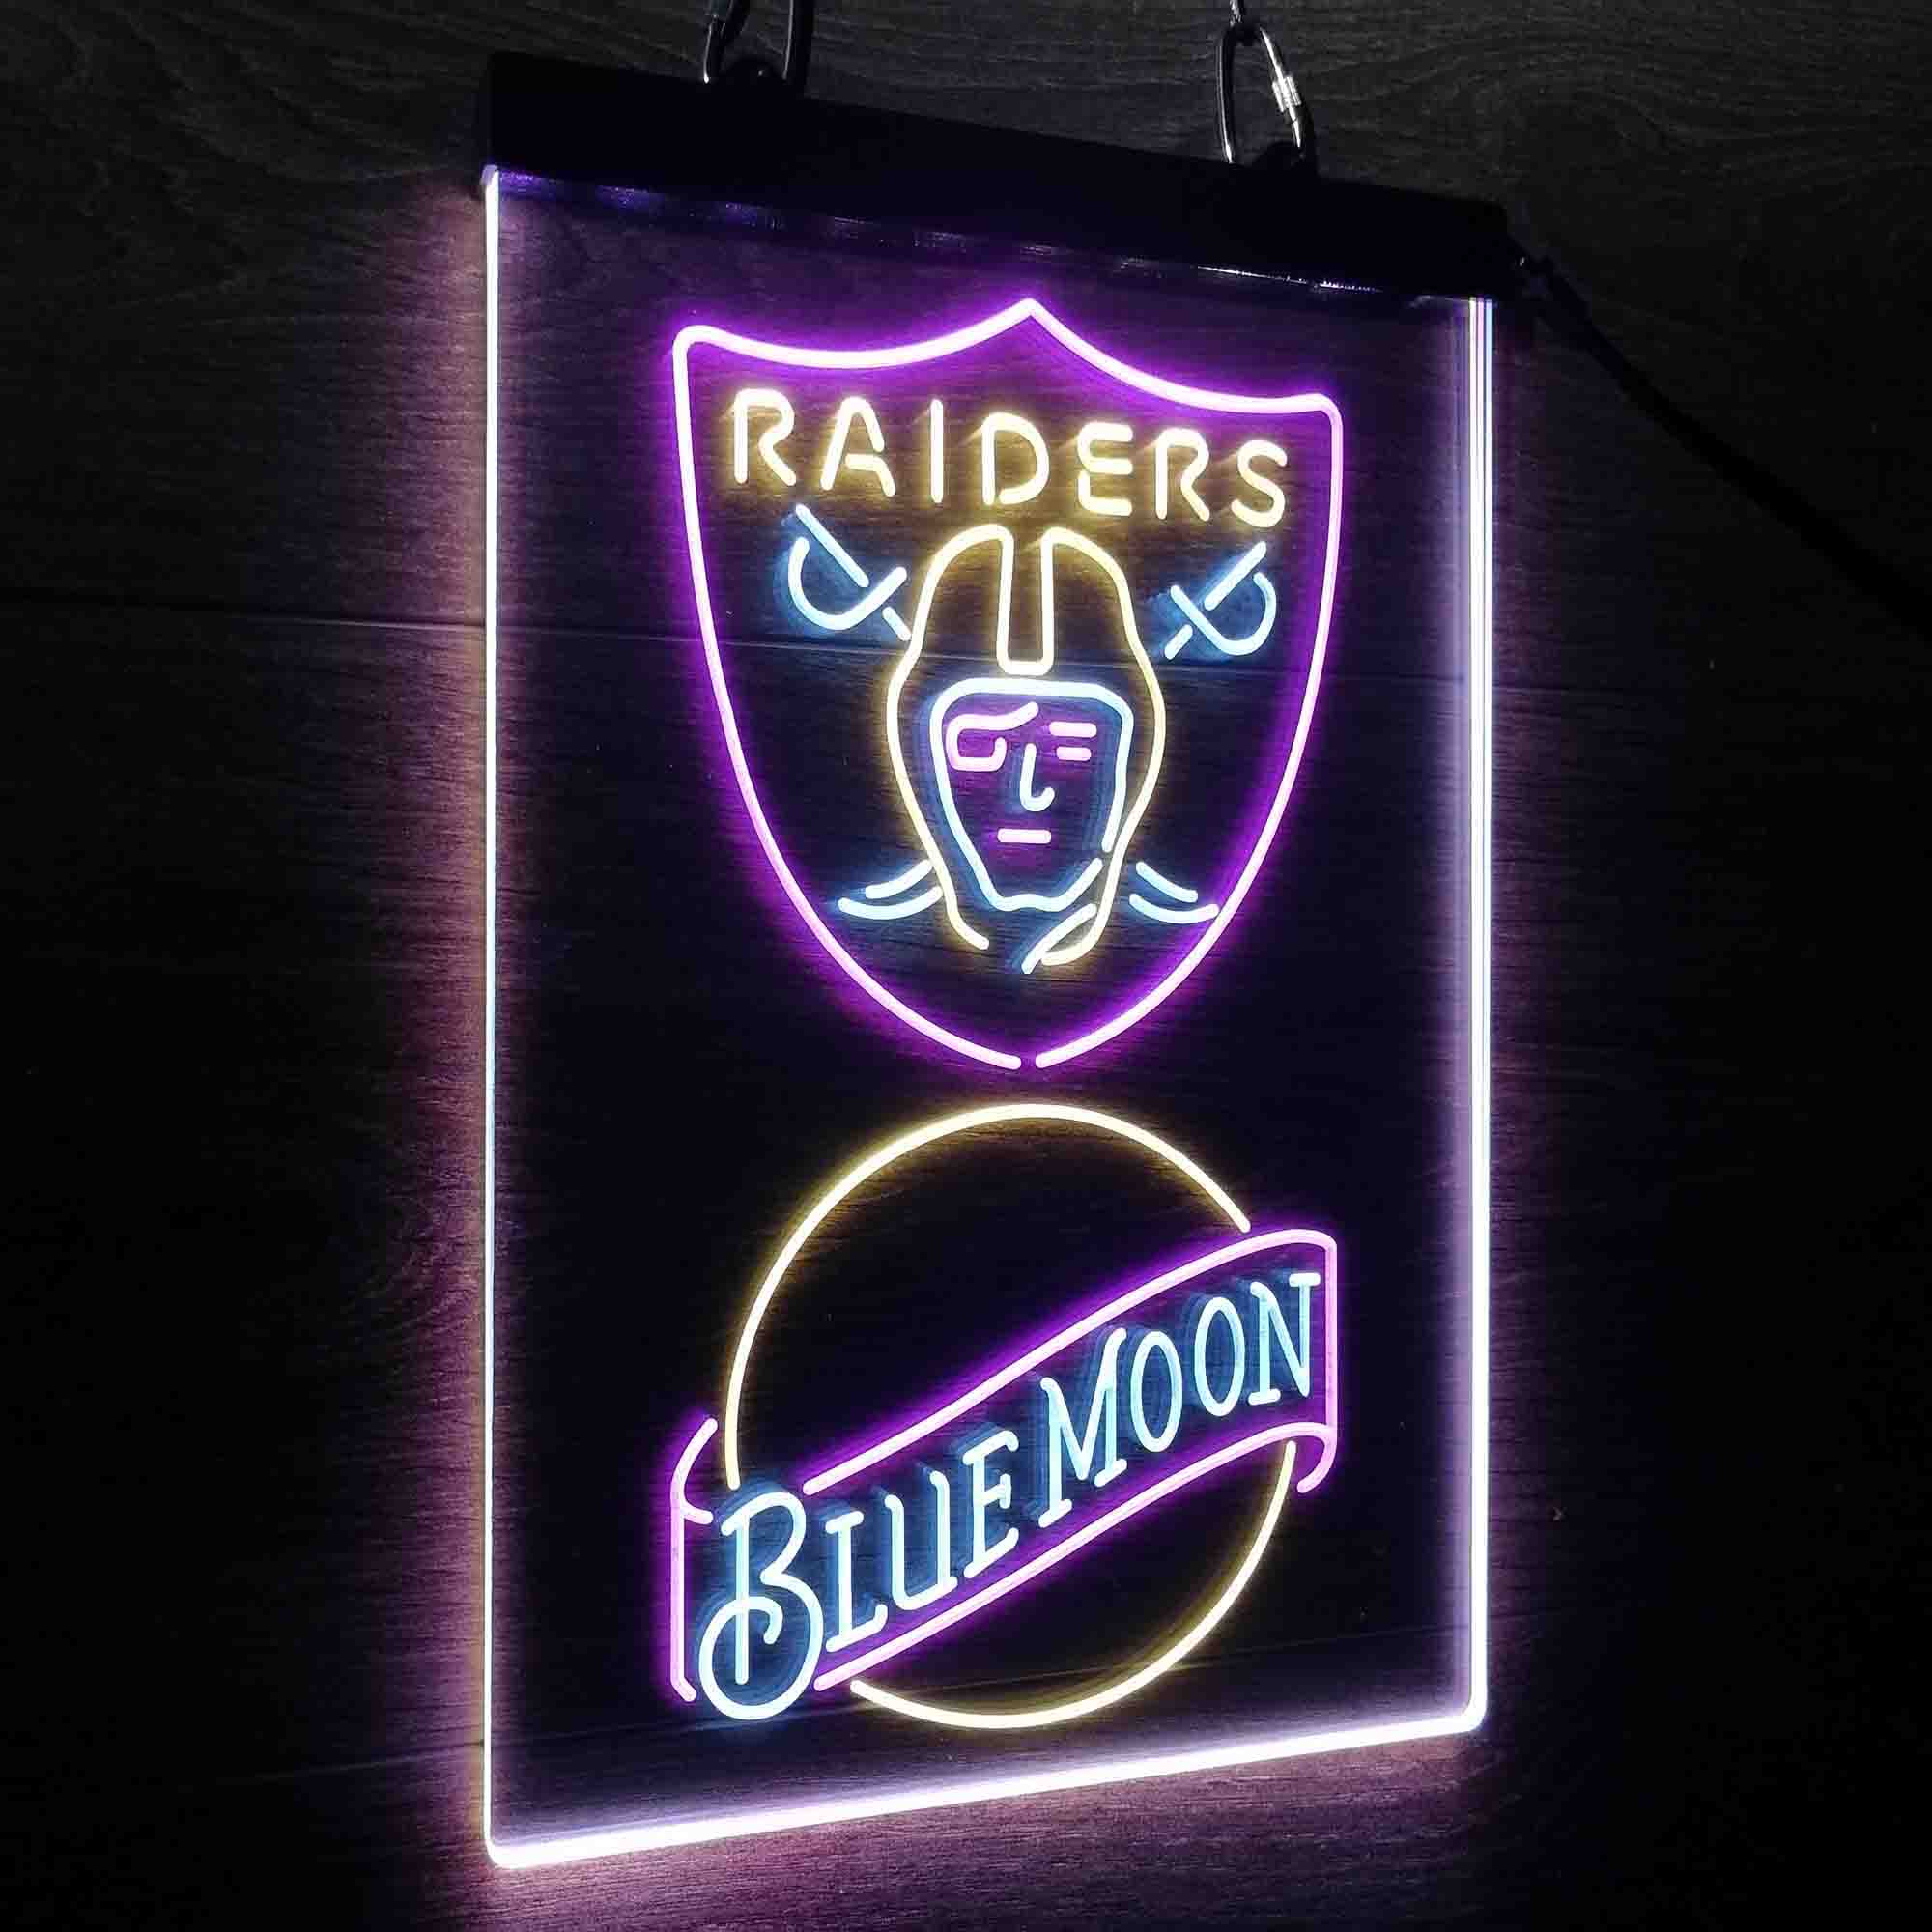 Blue Moon Bar Las Vegas Raiders Neon LED Sign 3 Colors